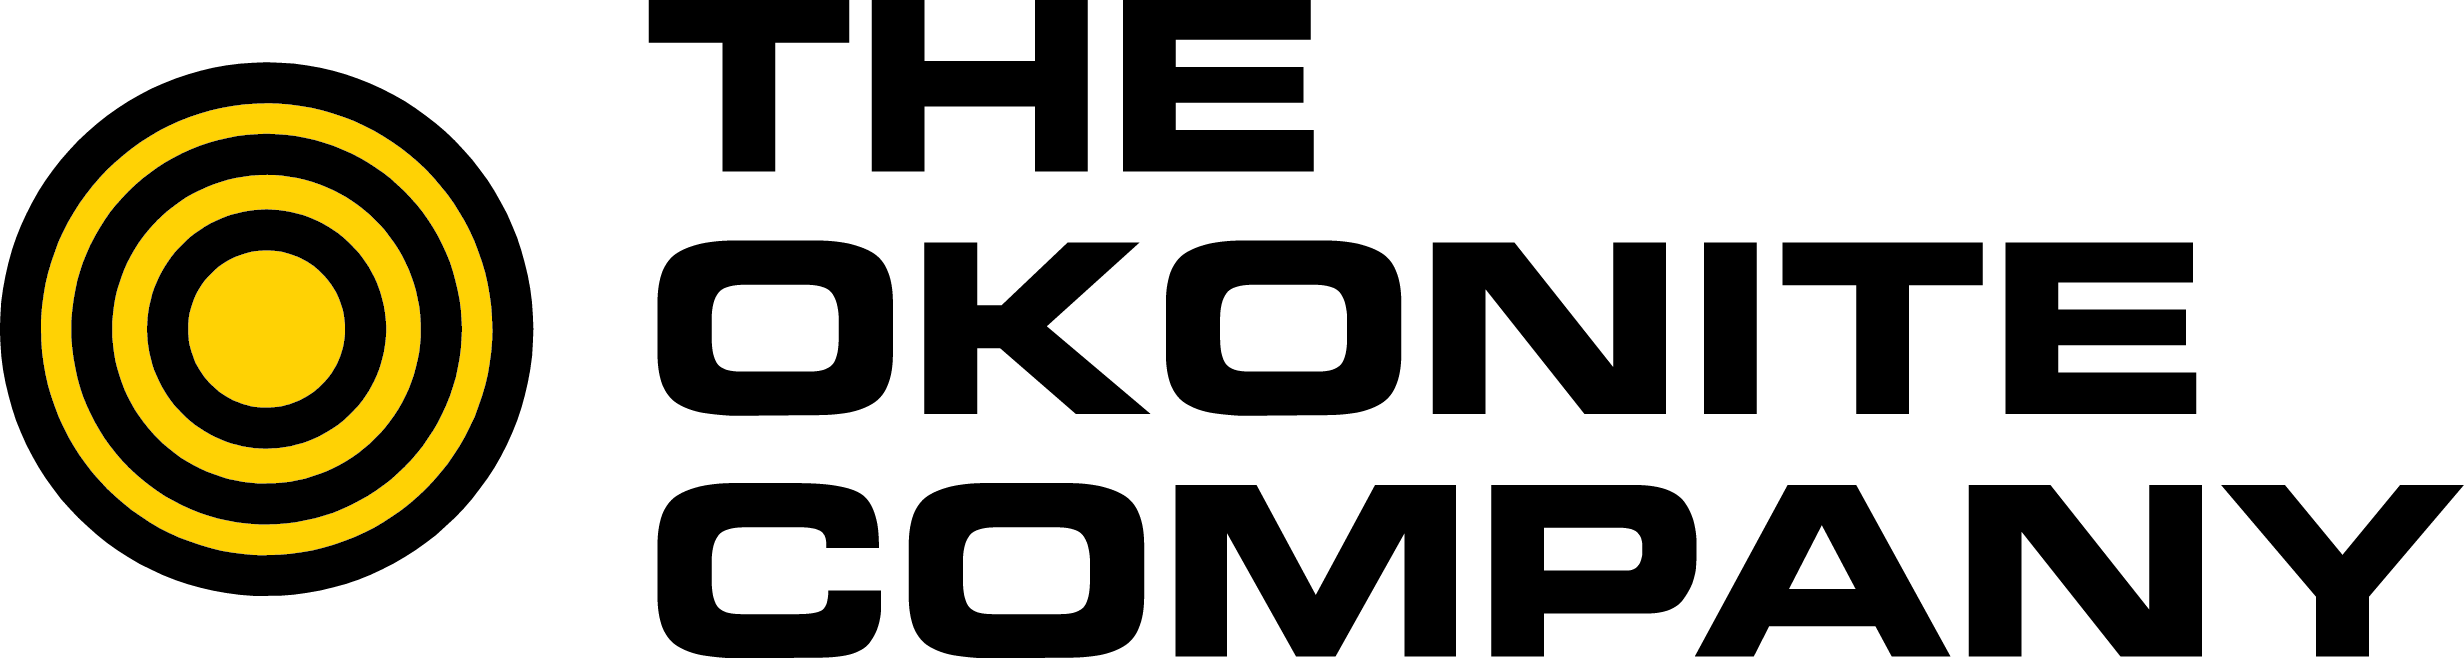 The Okonite Company